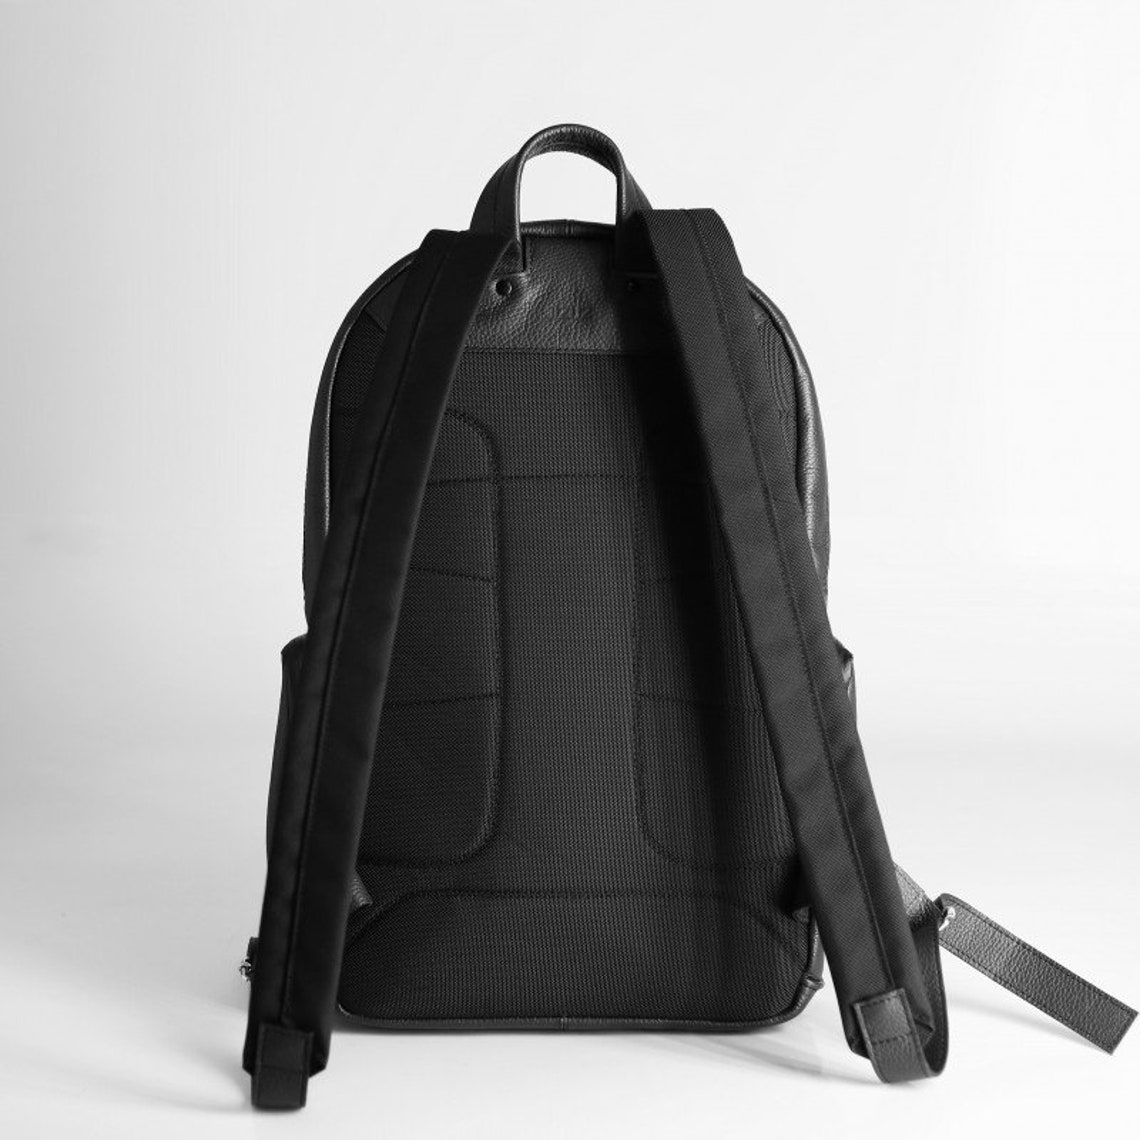 Black Leather Backpack Mike15 - Etsy UK